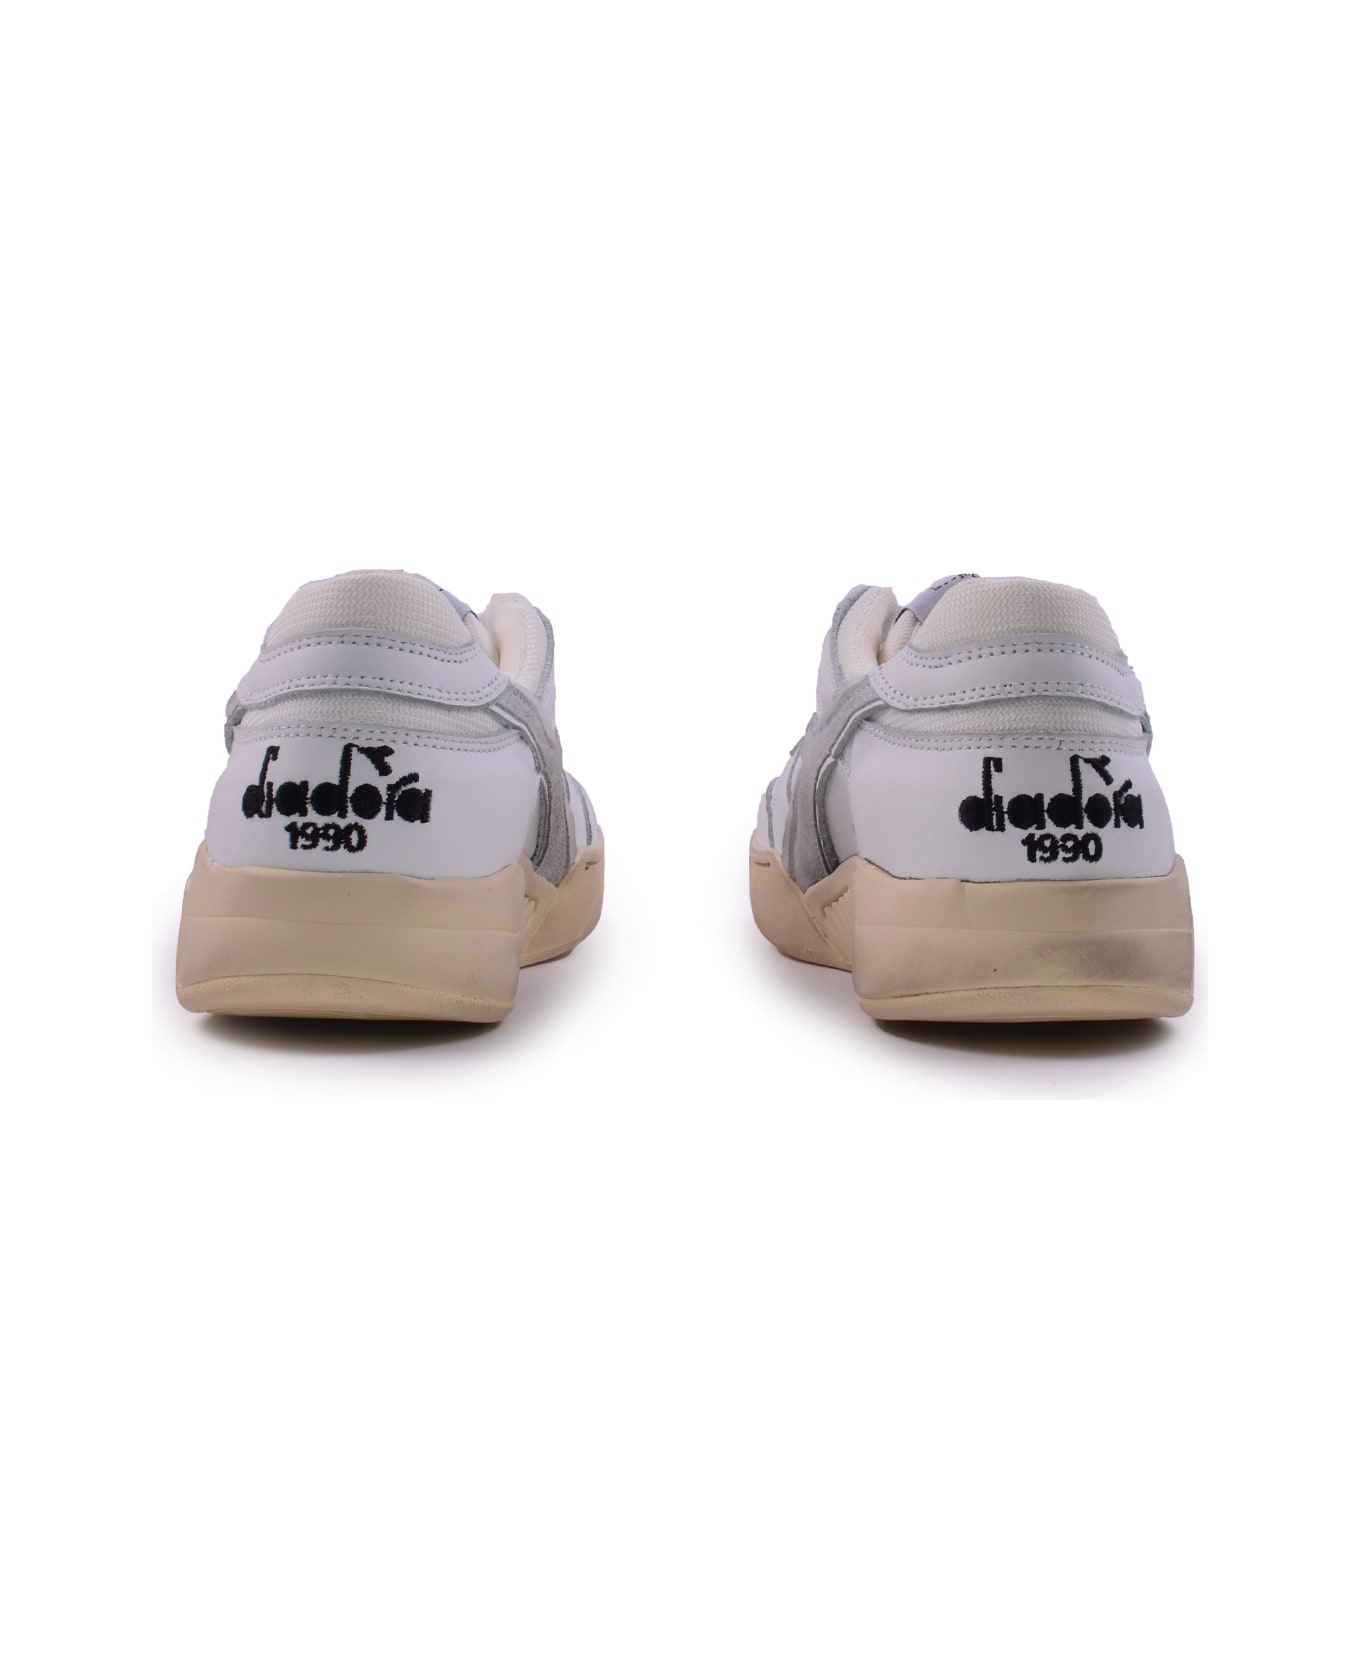 Diadora Heritage Sneakers - White スニーカー